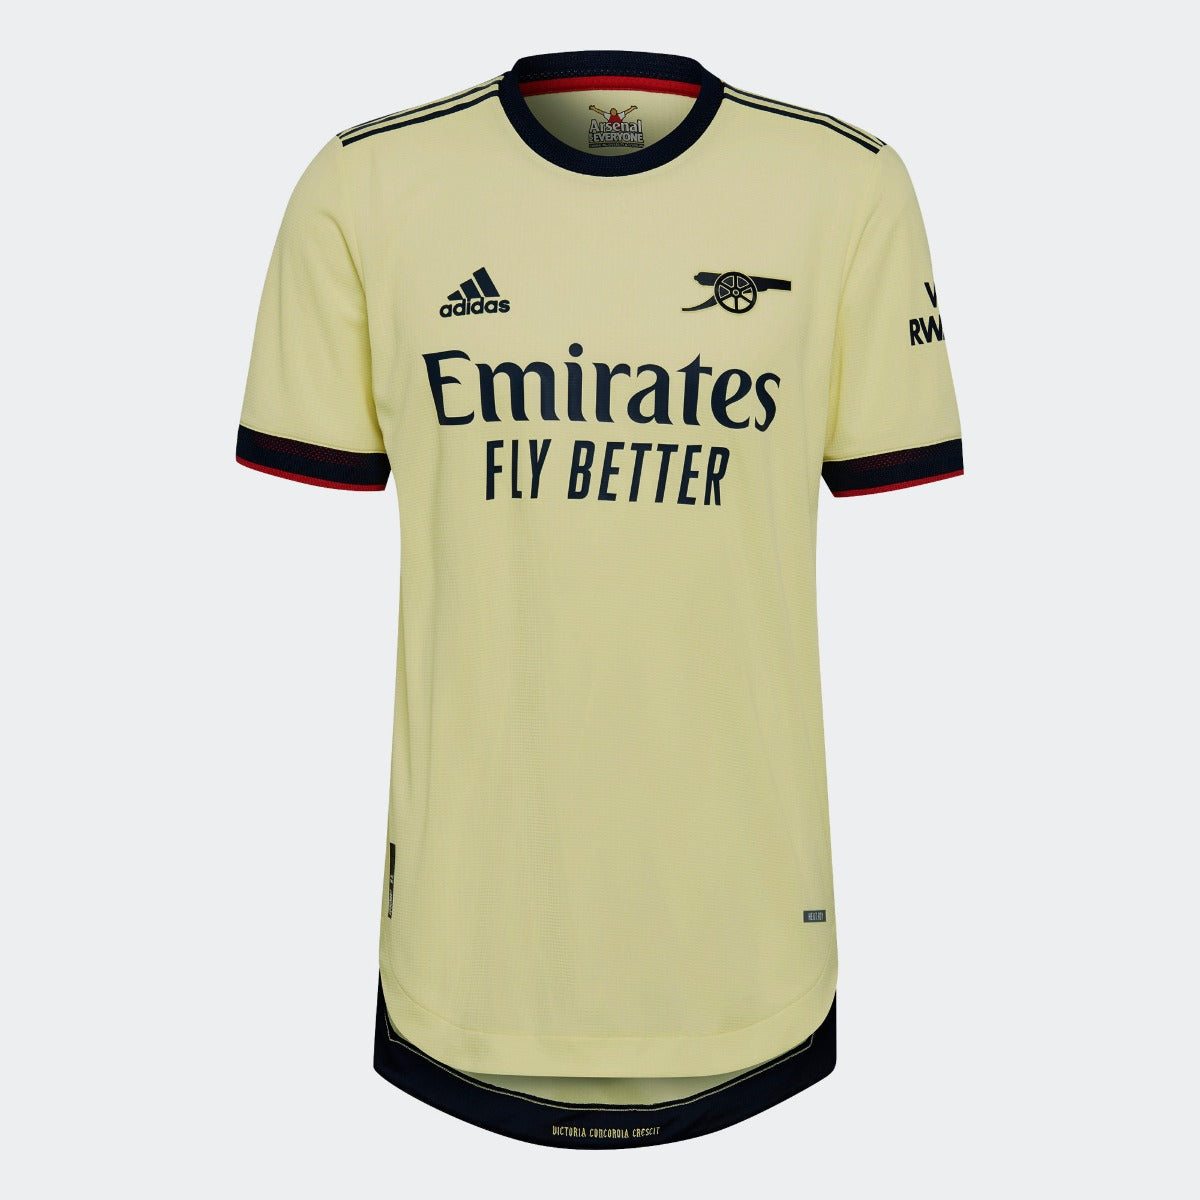 Adidas, Adidas 2021-22 Maglia Arsenal Authentic Away - Perla Citrino